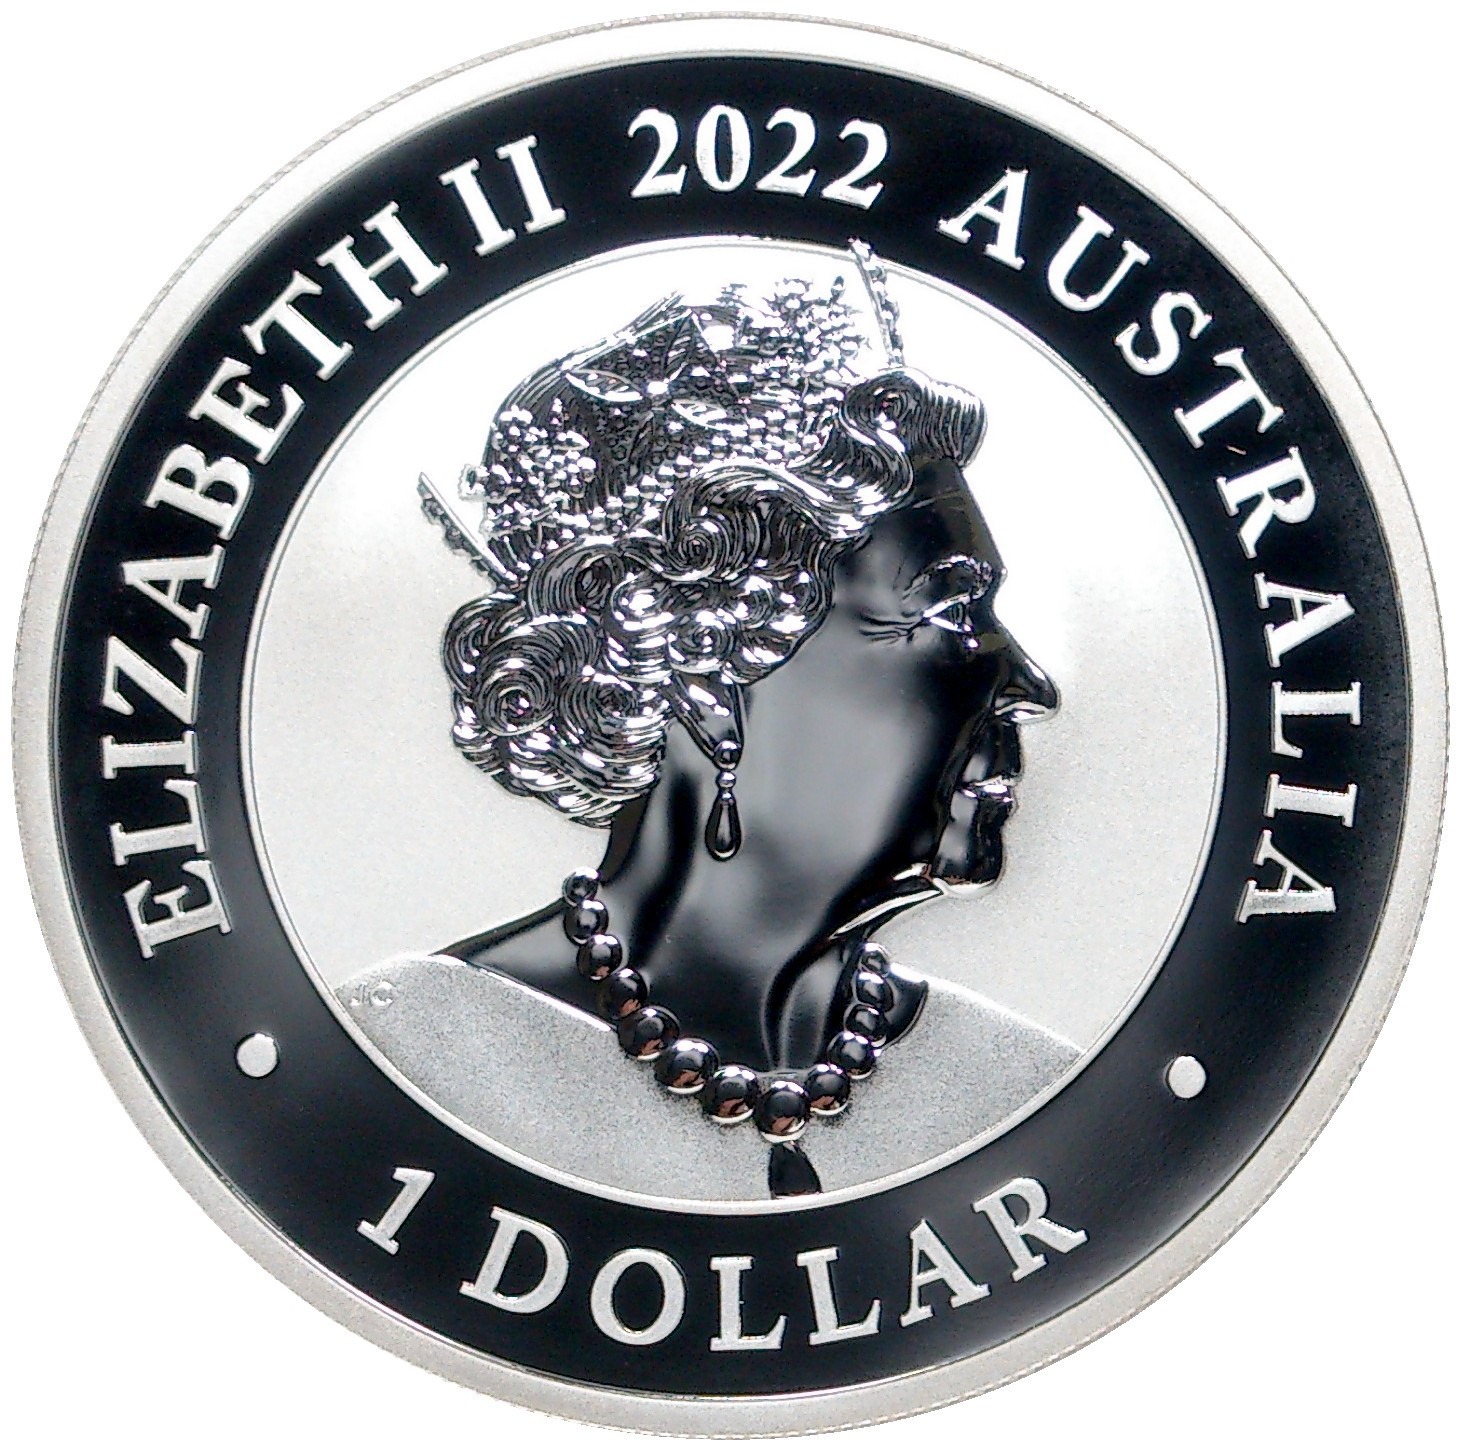 1 доллар австралия серебро. Монеты доллар 2022. Австралия 1 доллар 2022. Австралия серебряные монеты носарок. Доллар в 2022 году.